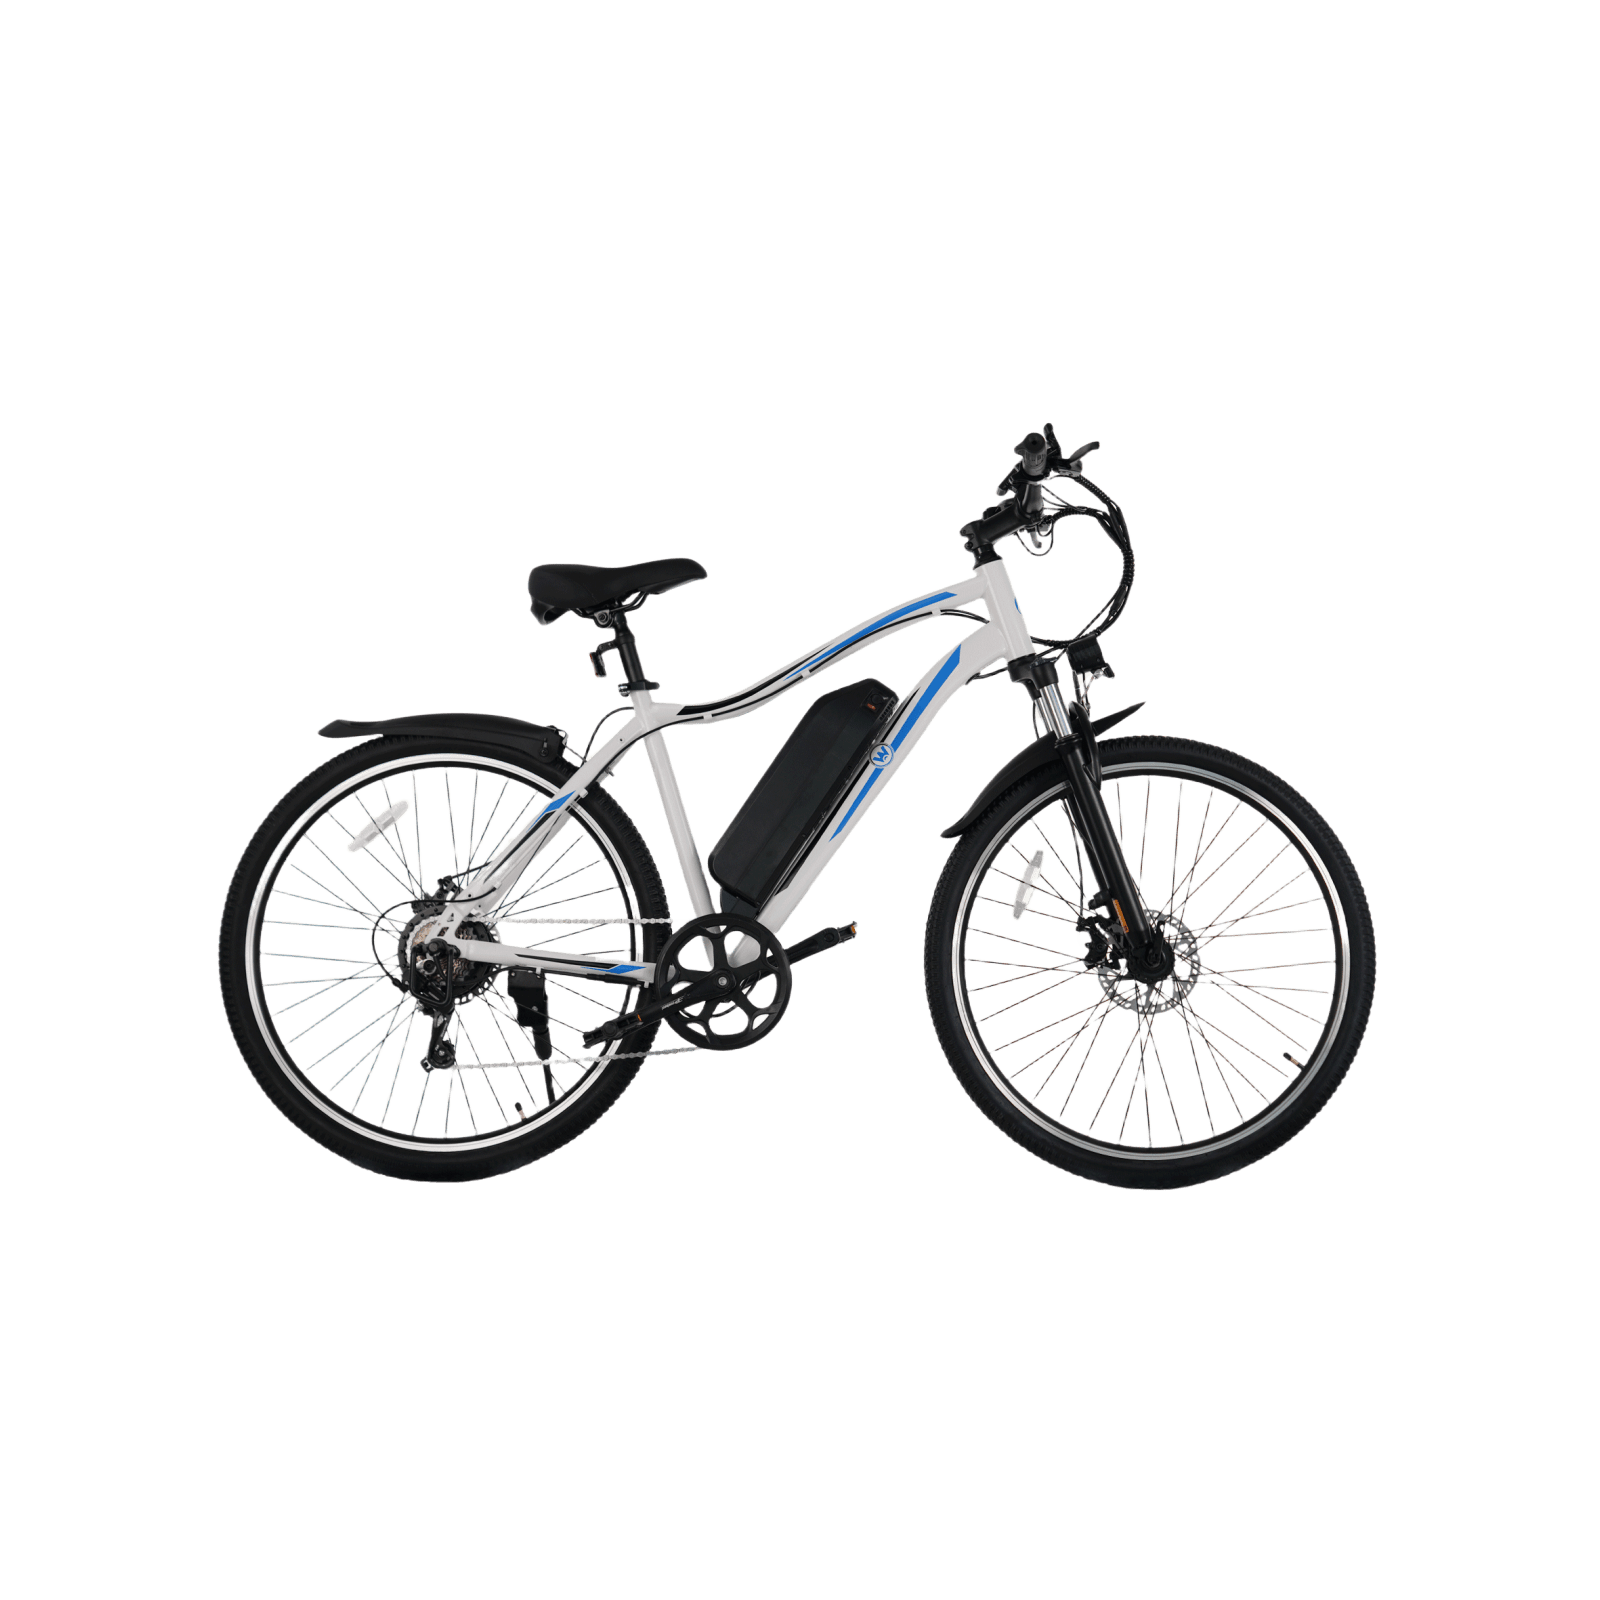 The Aries Mountain electric Bike 27.5 "has a range of 48 miles - C INVERTER Electric bike